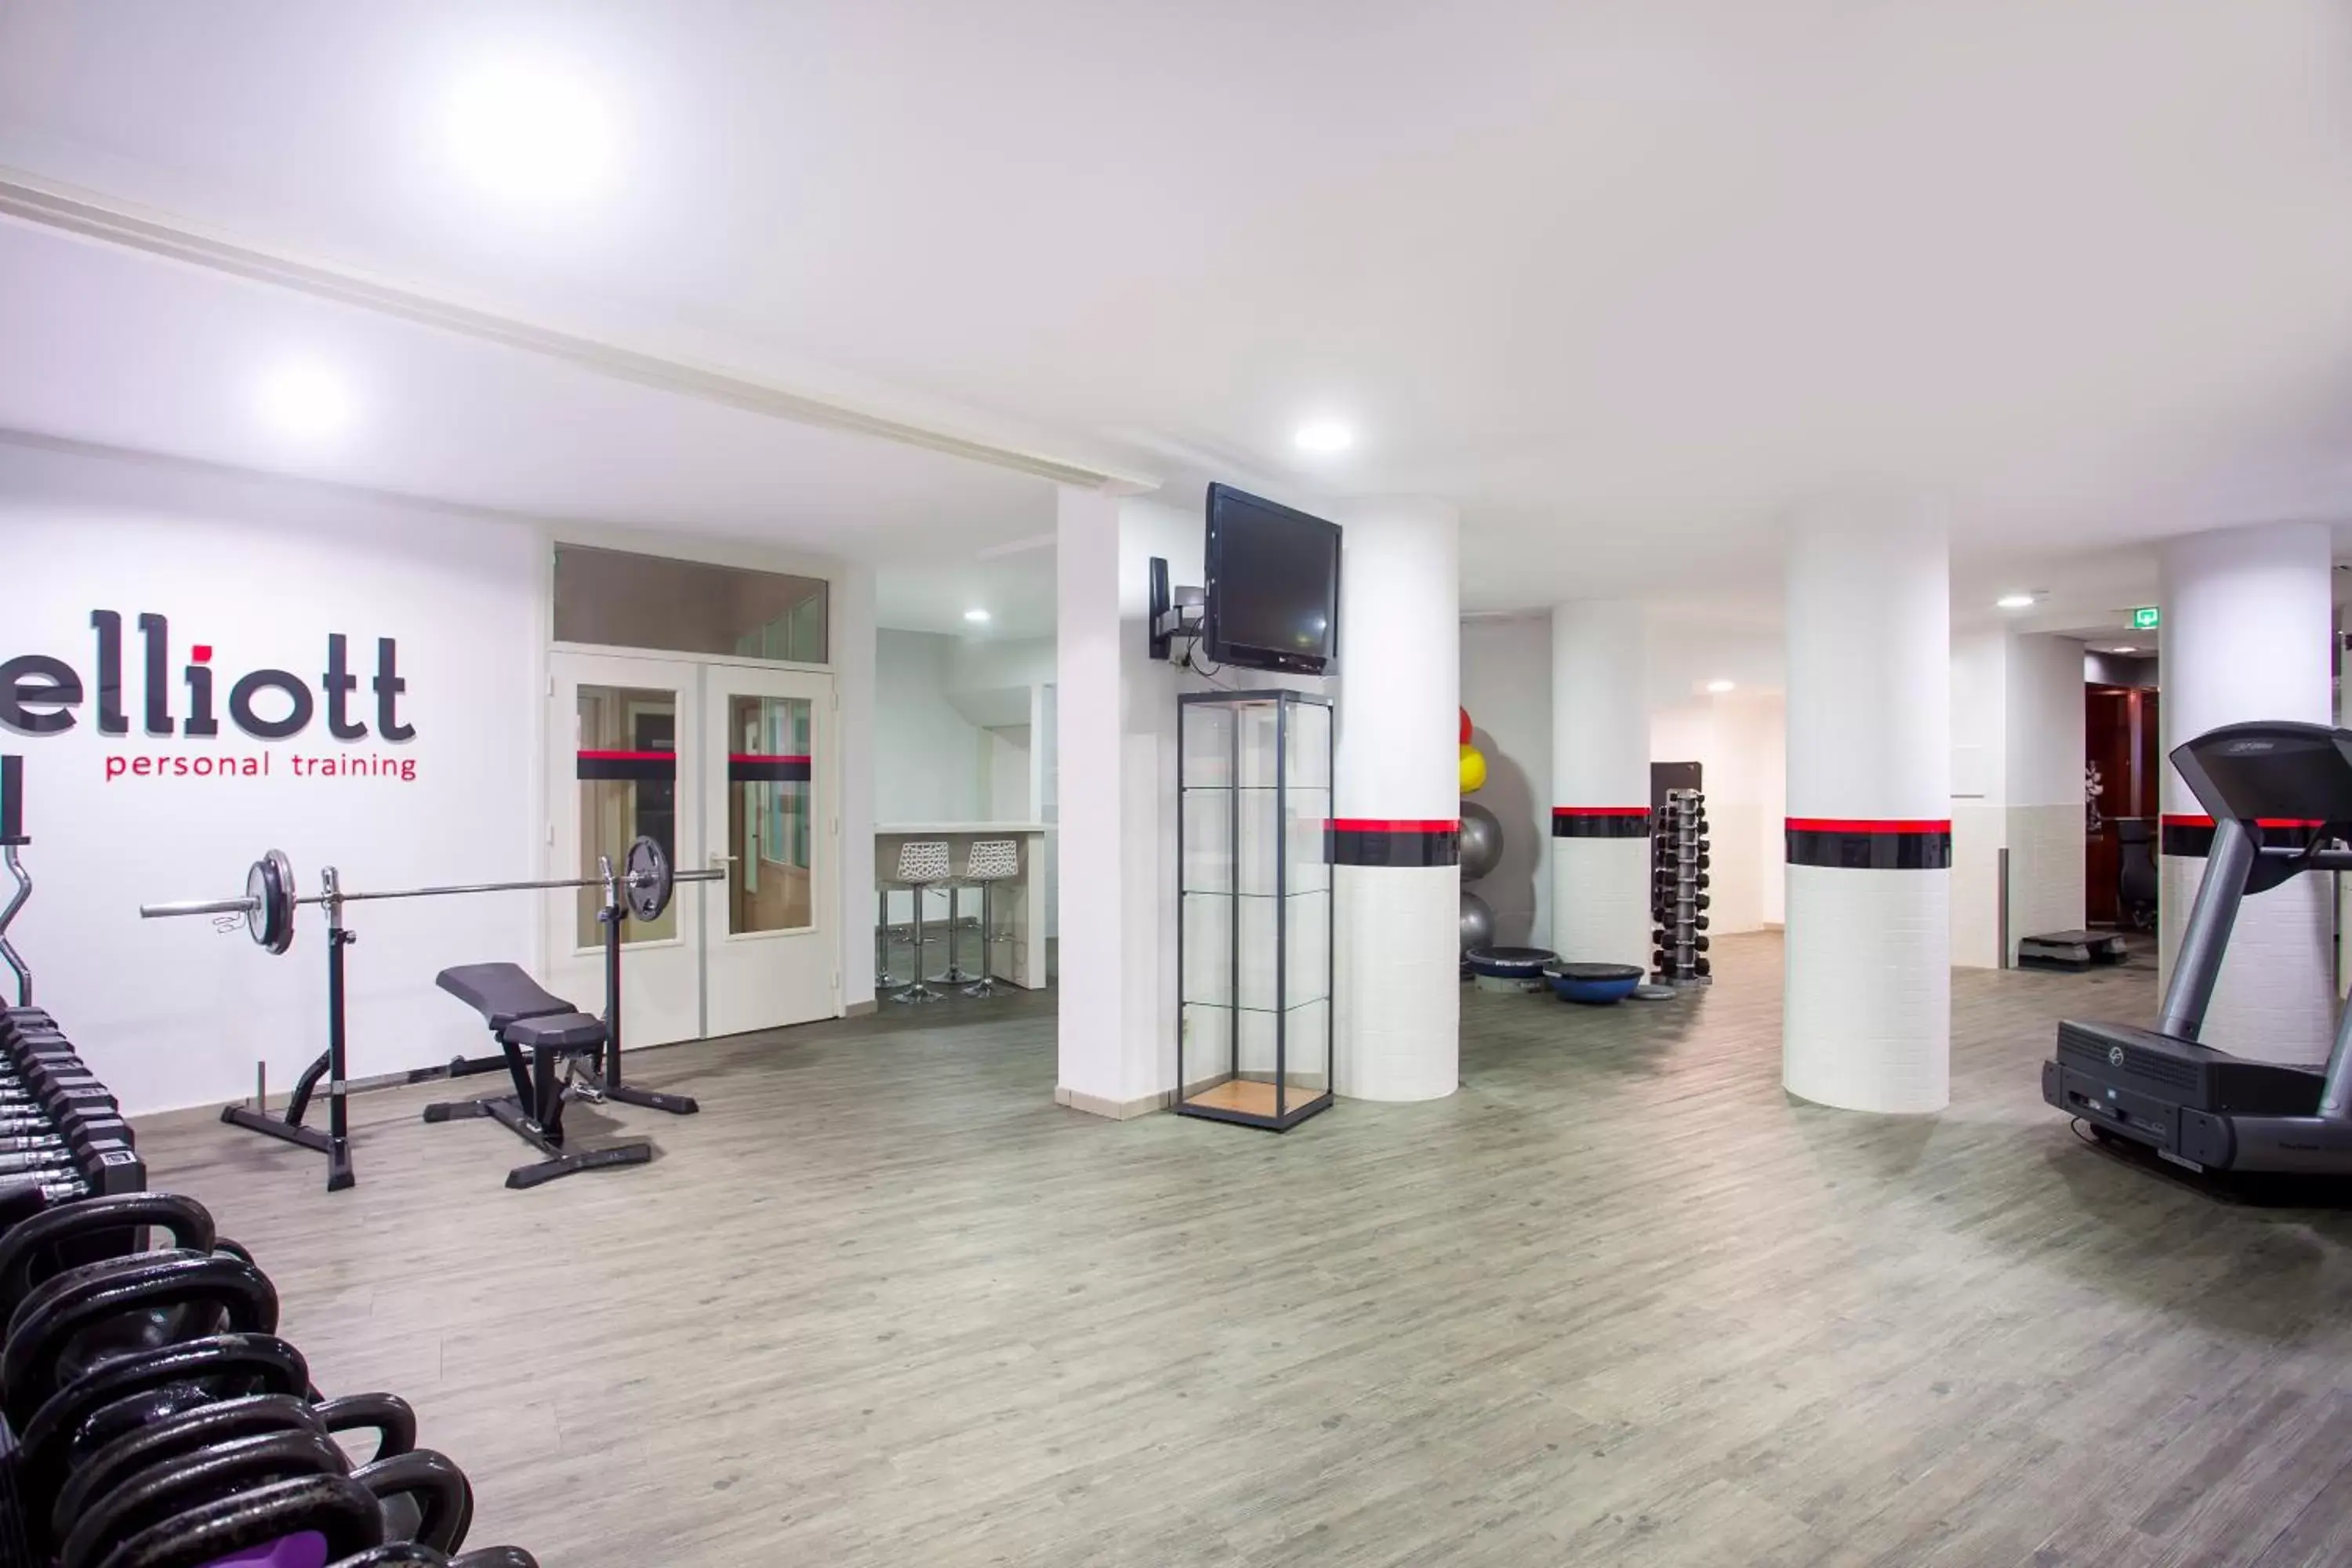 Fitness centre/facilities, Fitness Center/Facilities in Van der Valk Theaterhotel Almelo